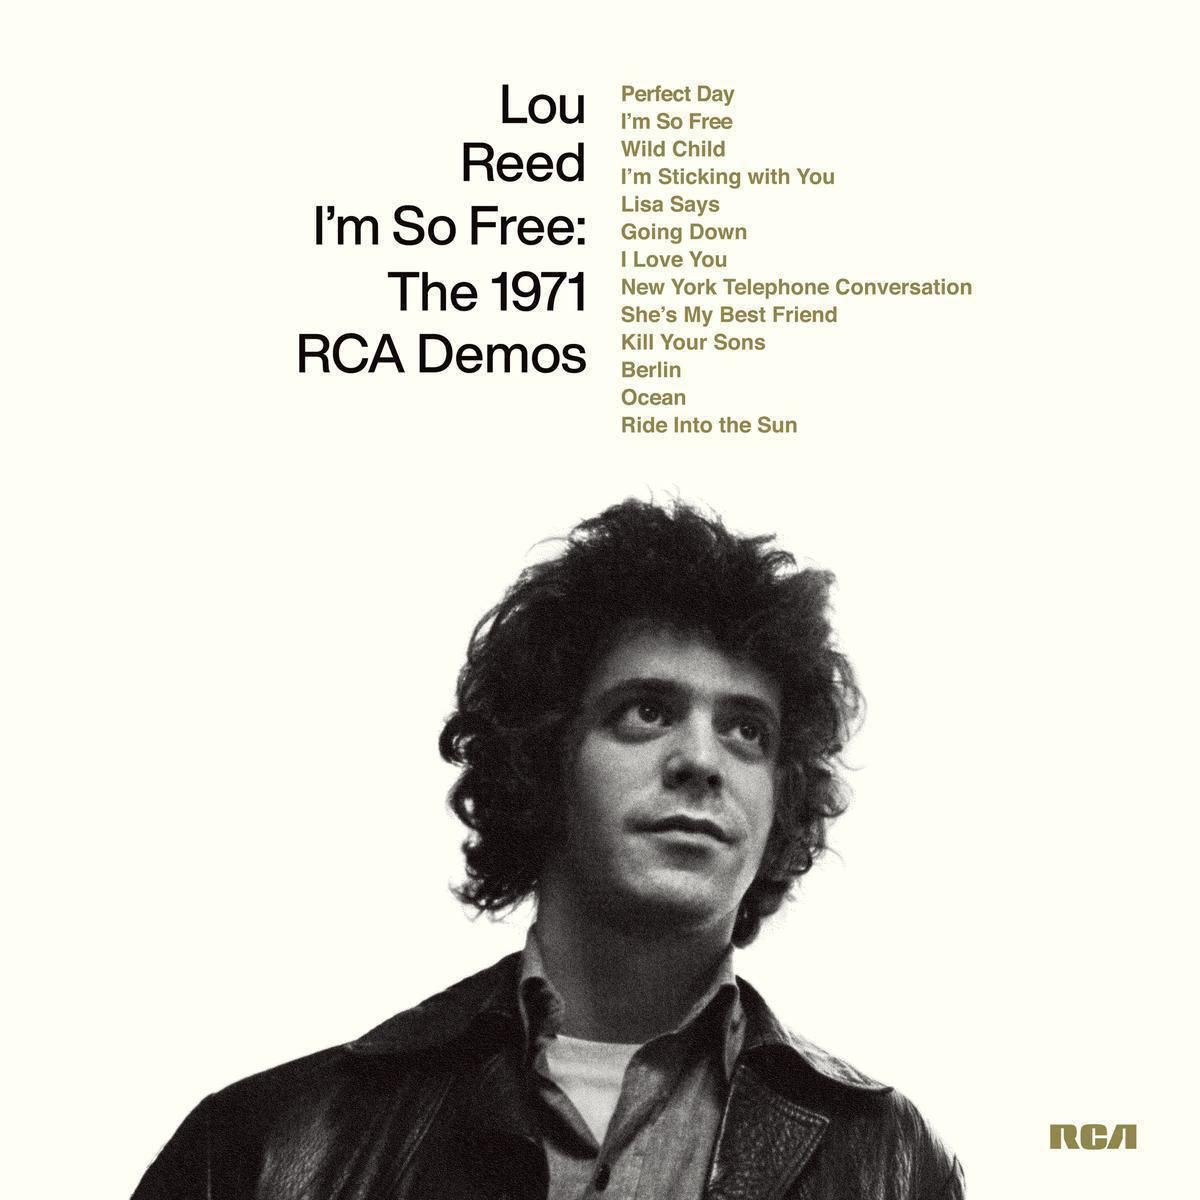 Lou Reed Im So Free The 1971 RCA Demos